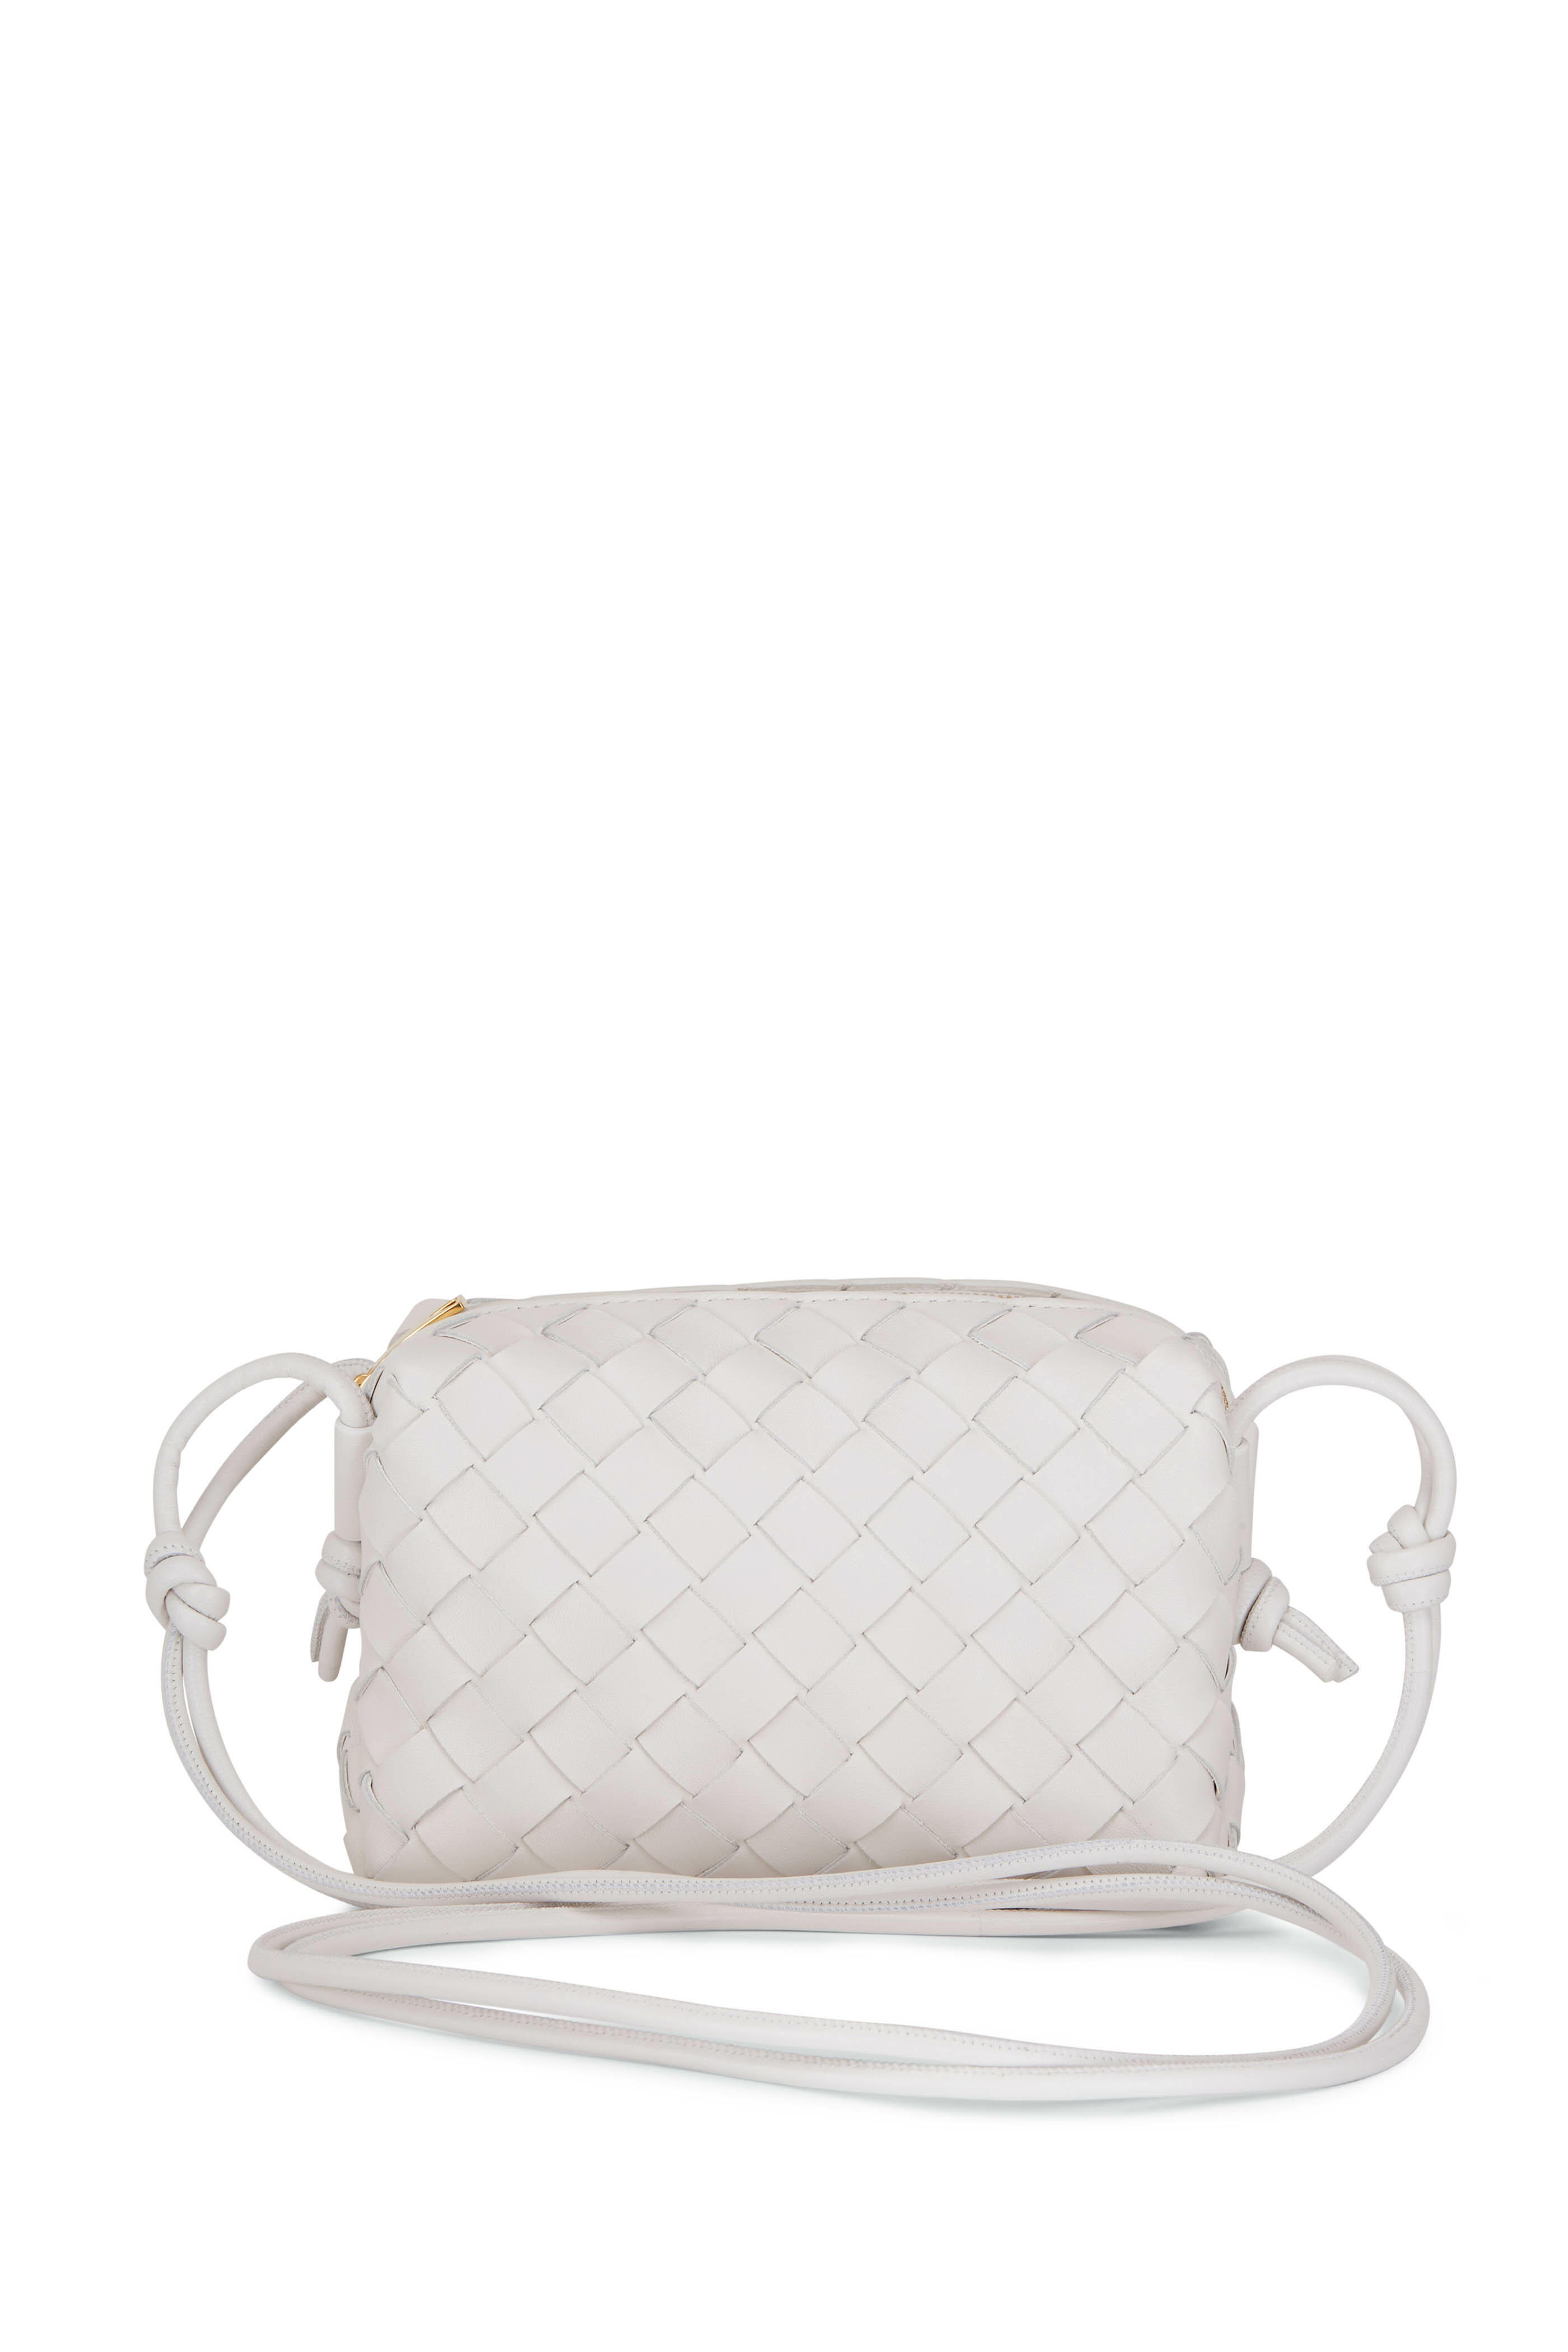 Loop Mini Leather Crossbody Bag in White - Bottega Veneta